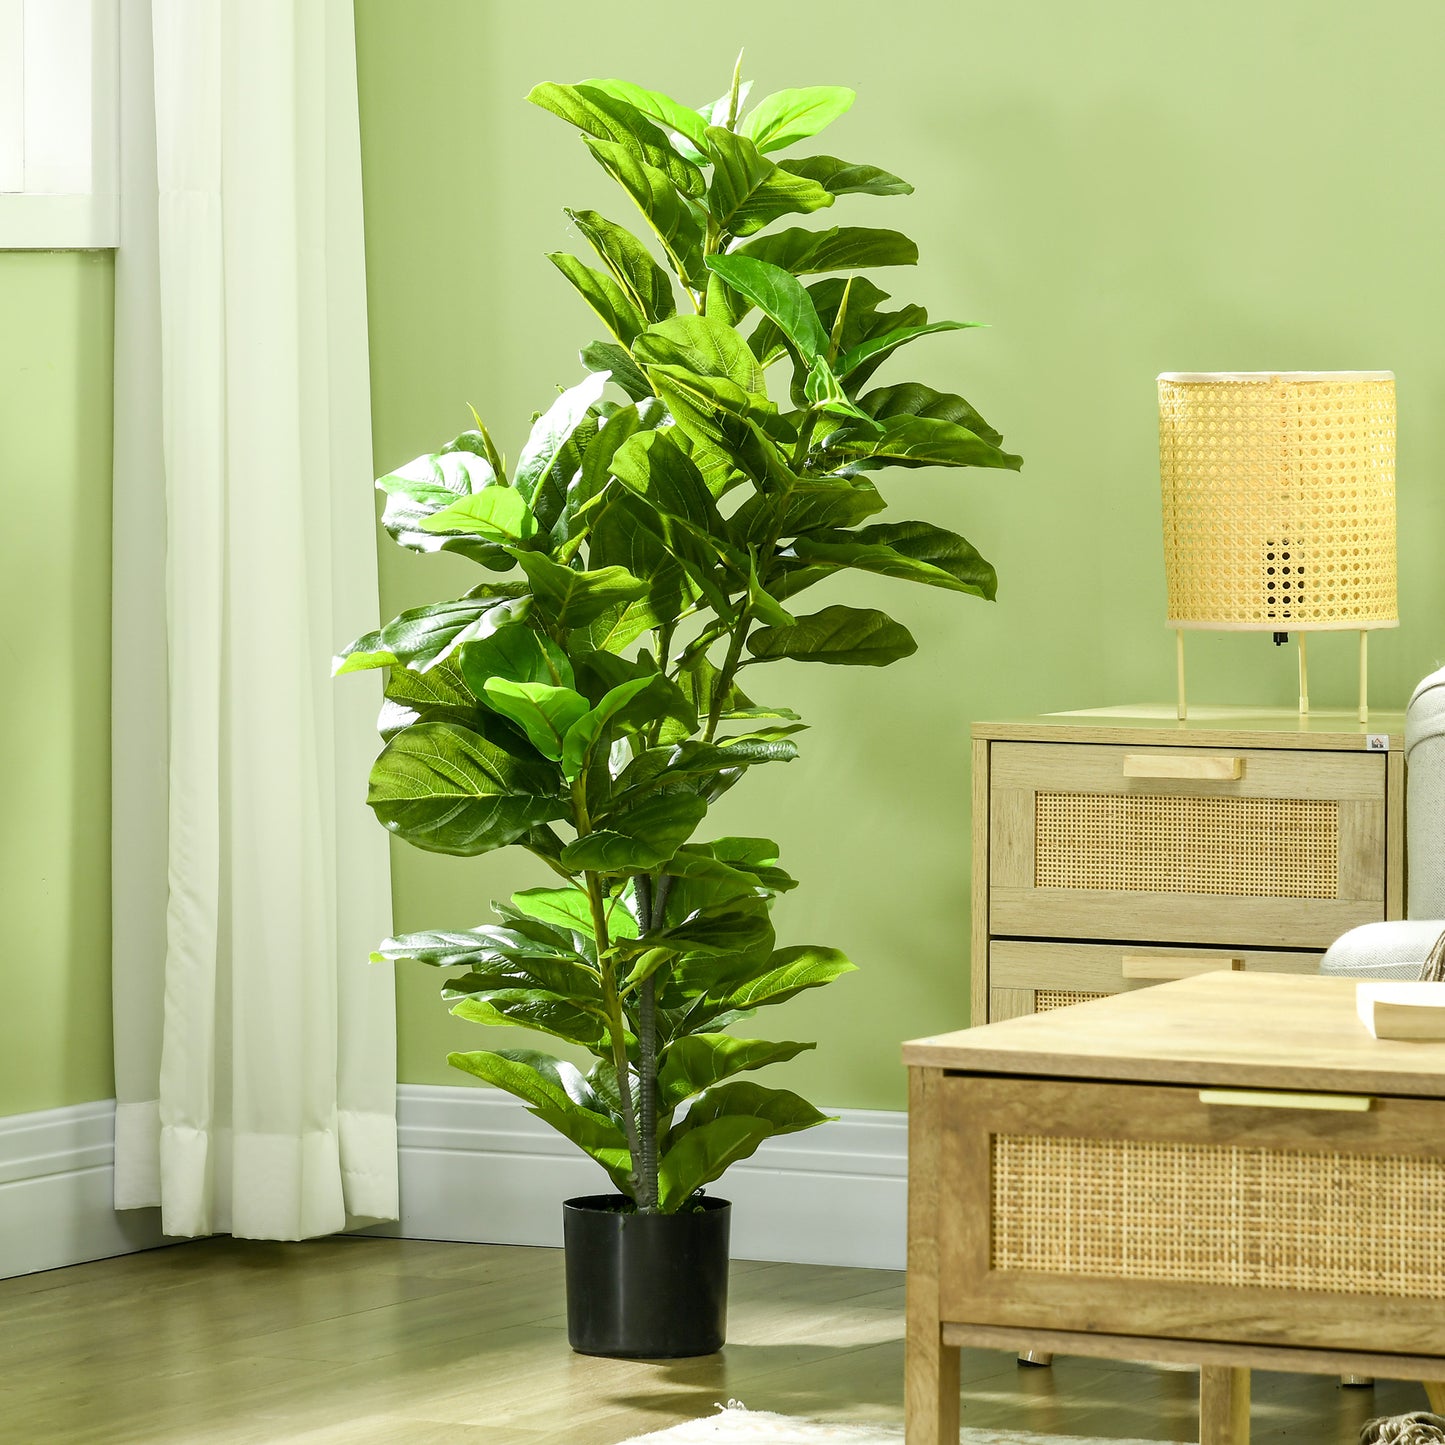 HOMCOM Planta Ficus Artificial 110 cm Árbol Artificial con 90 Hojas Musgo y Maceta Planta Artificial Decorativa para Interior y Exterior Hogar Salón Verde